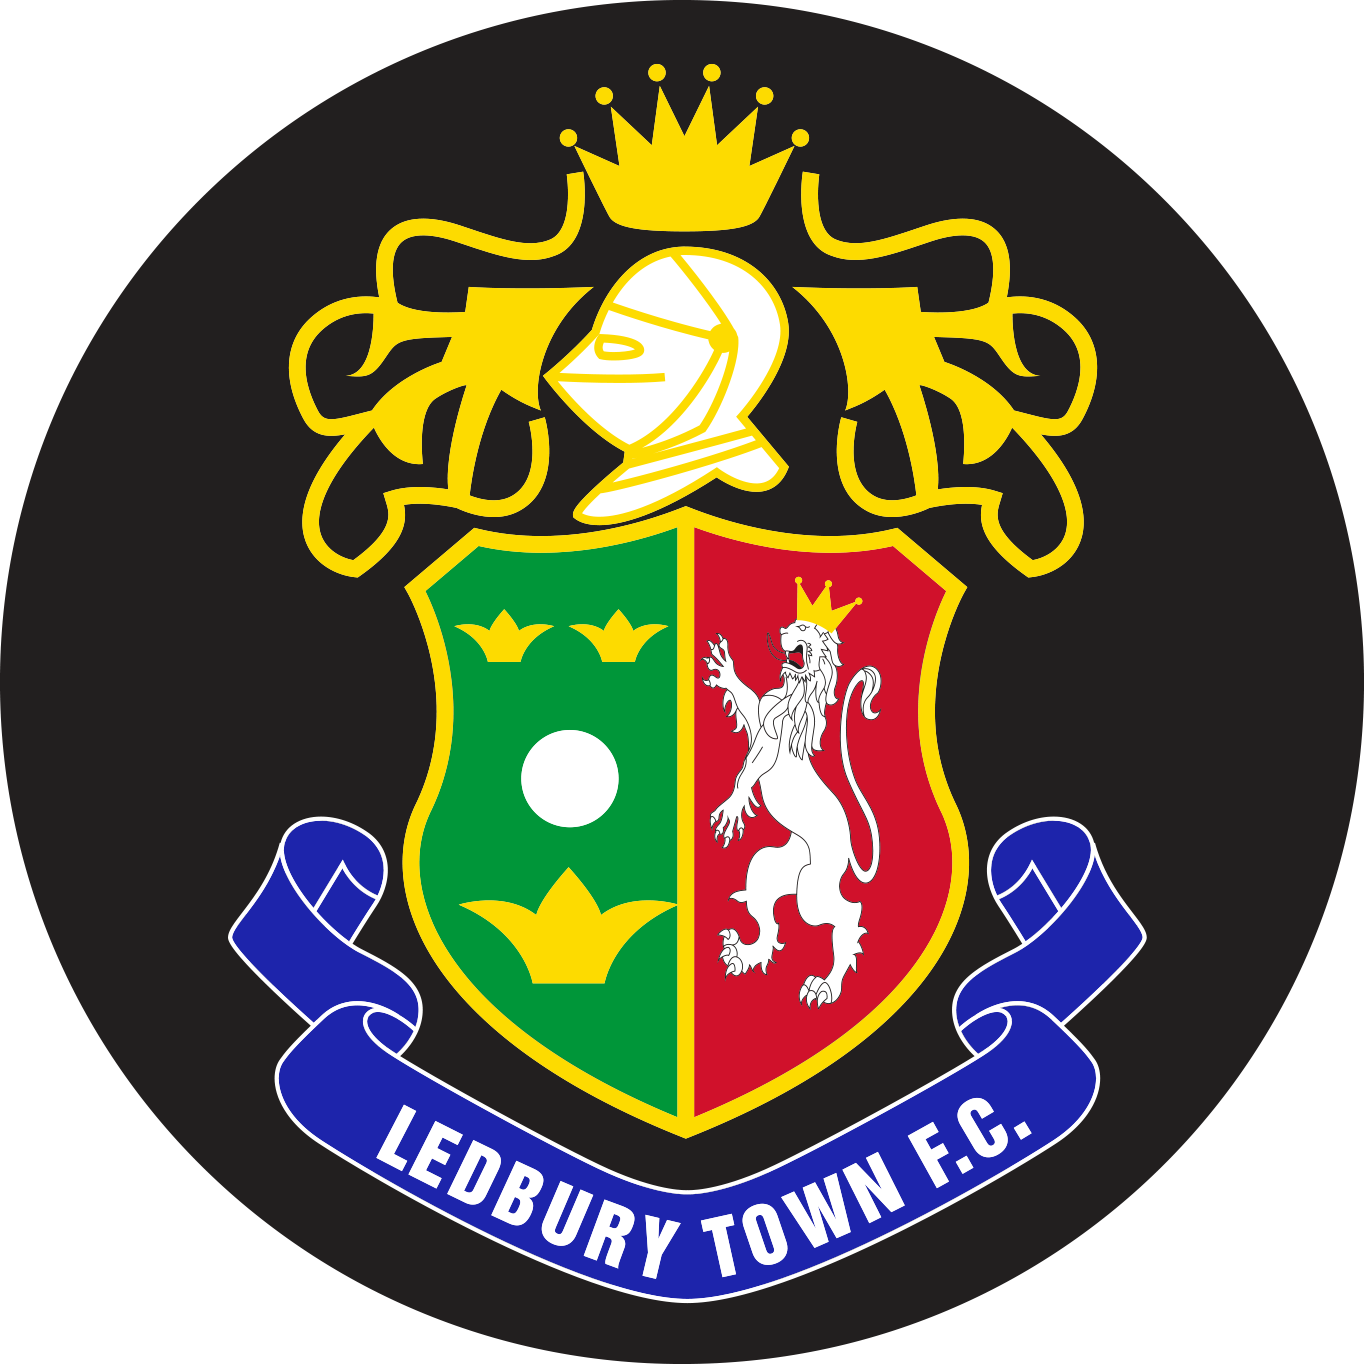 Ledbury Town Football Club